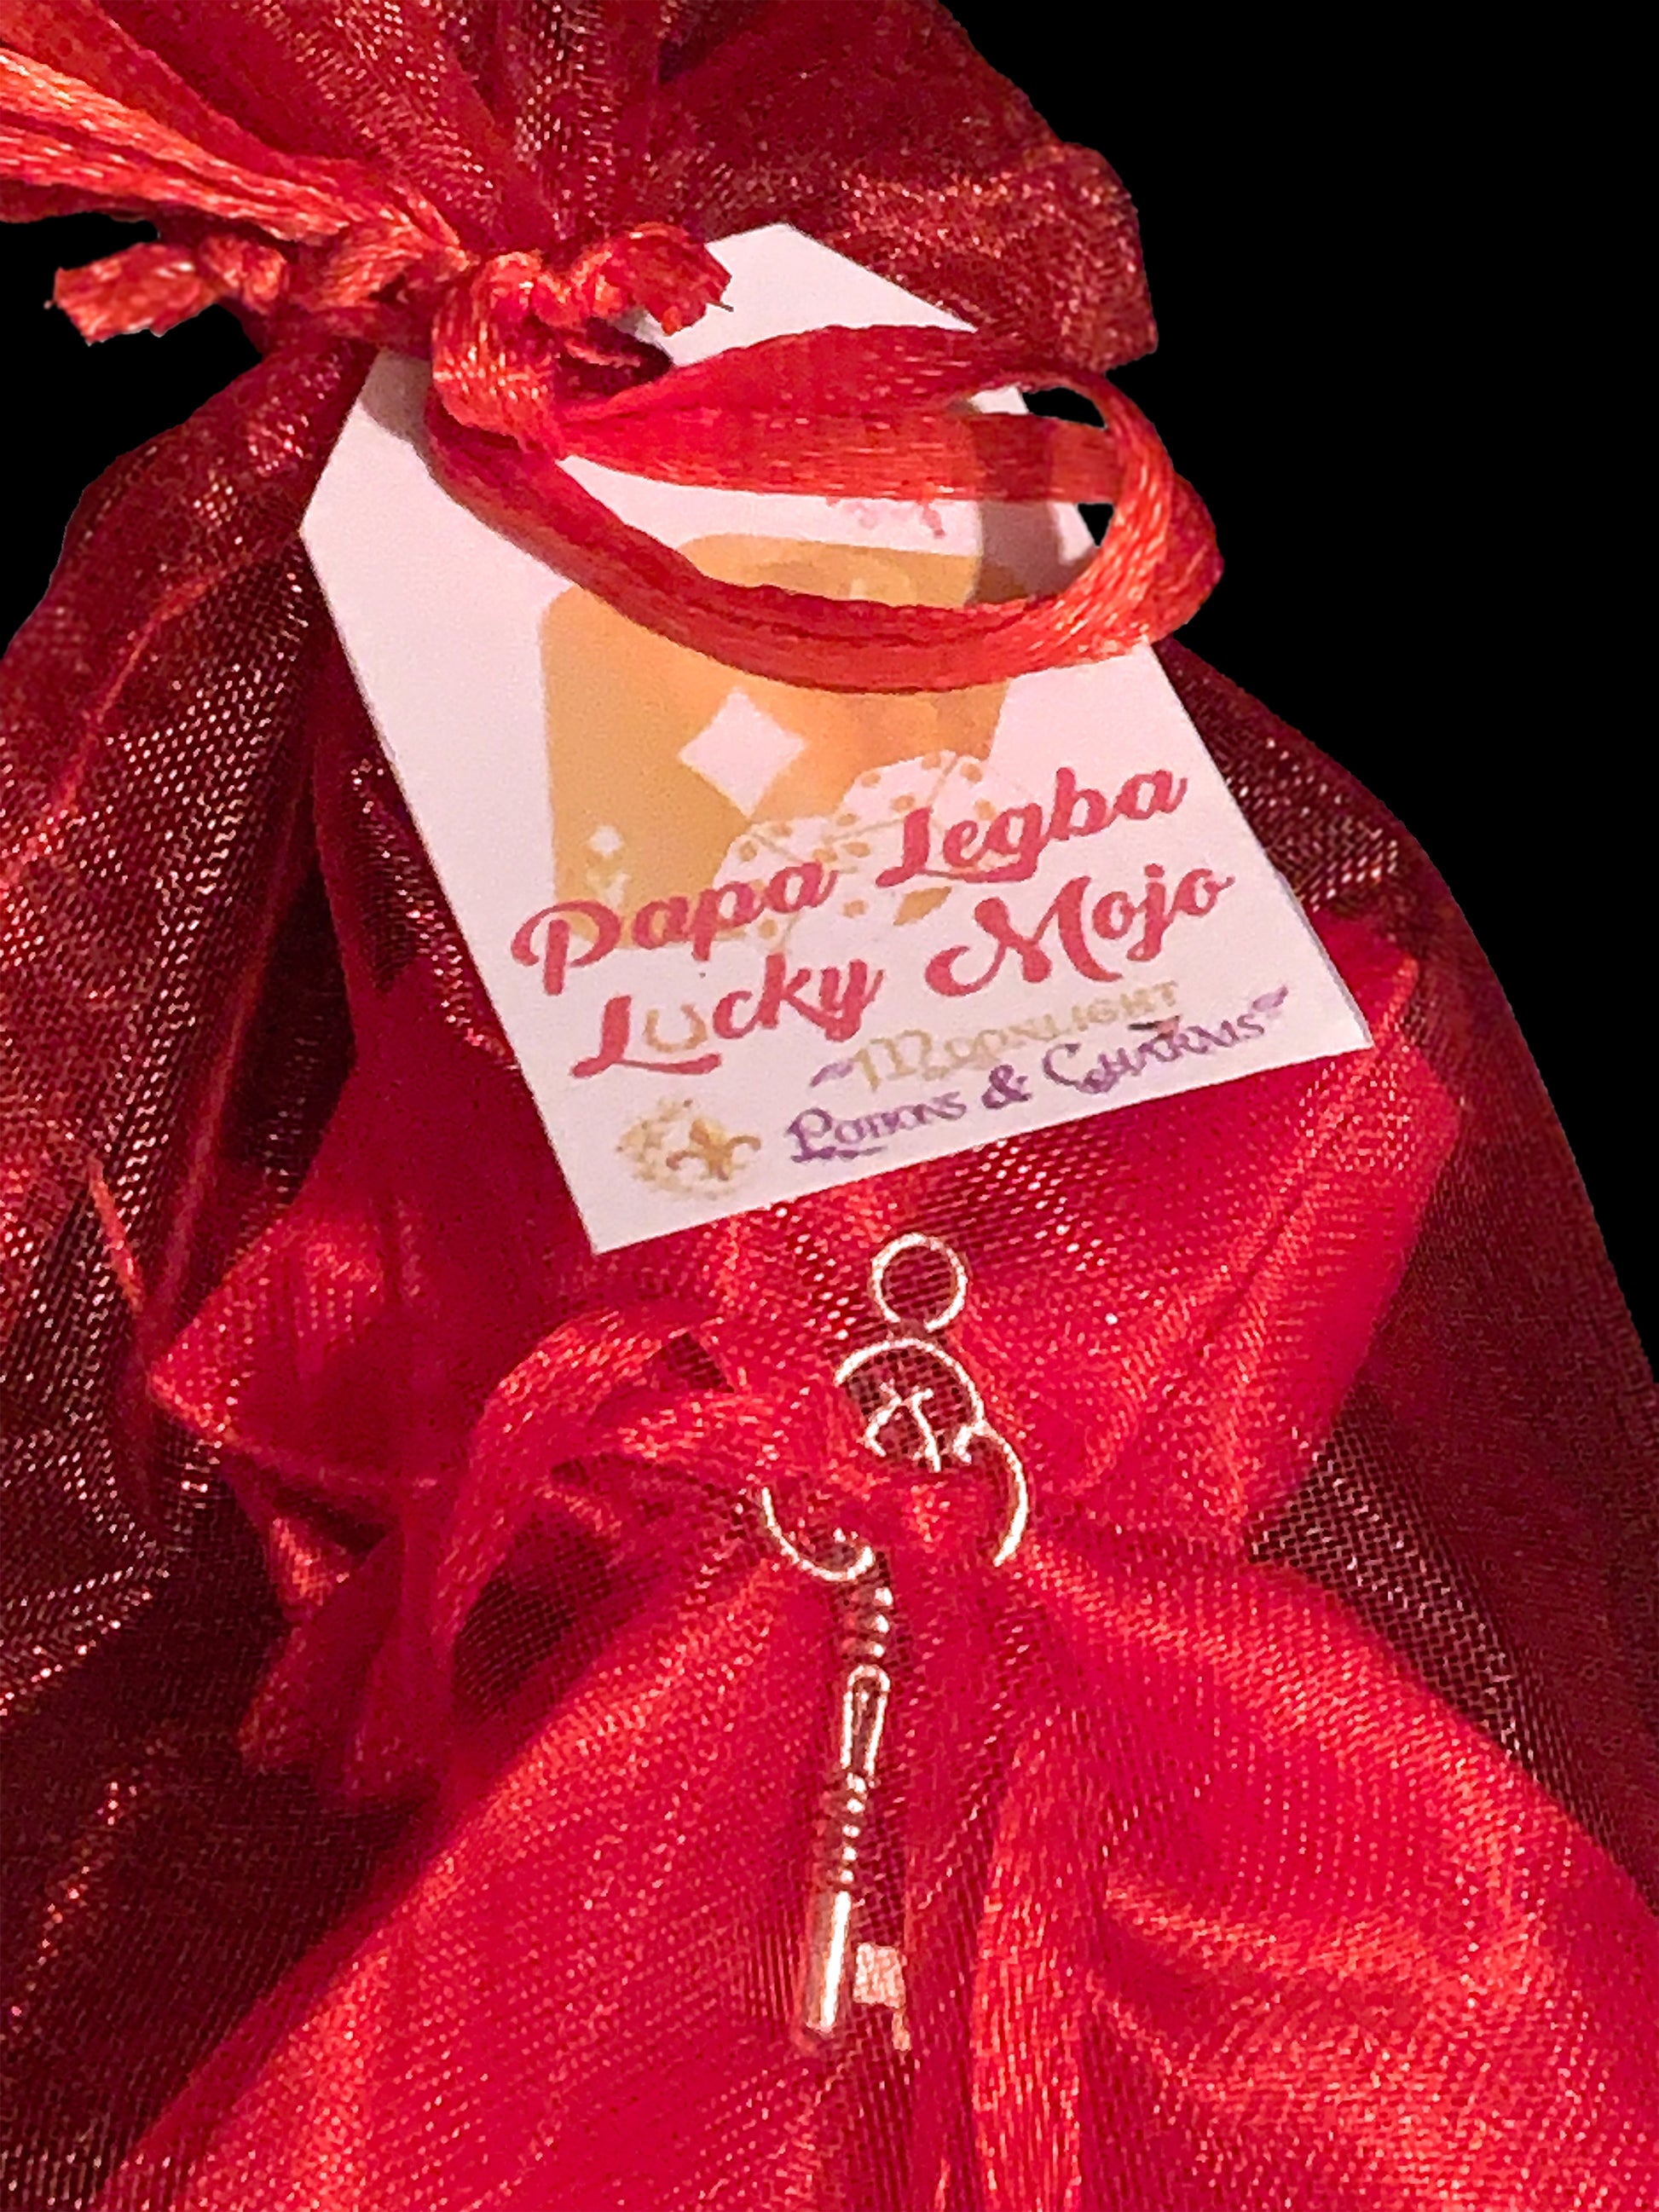 Papa Legba's Lucky Mojo Bag, Key - Moonlight Potion s& Charms